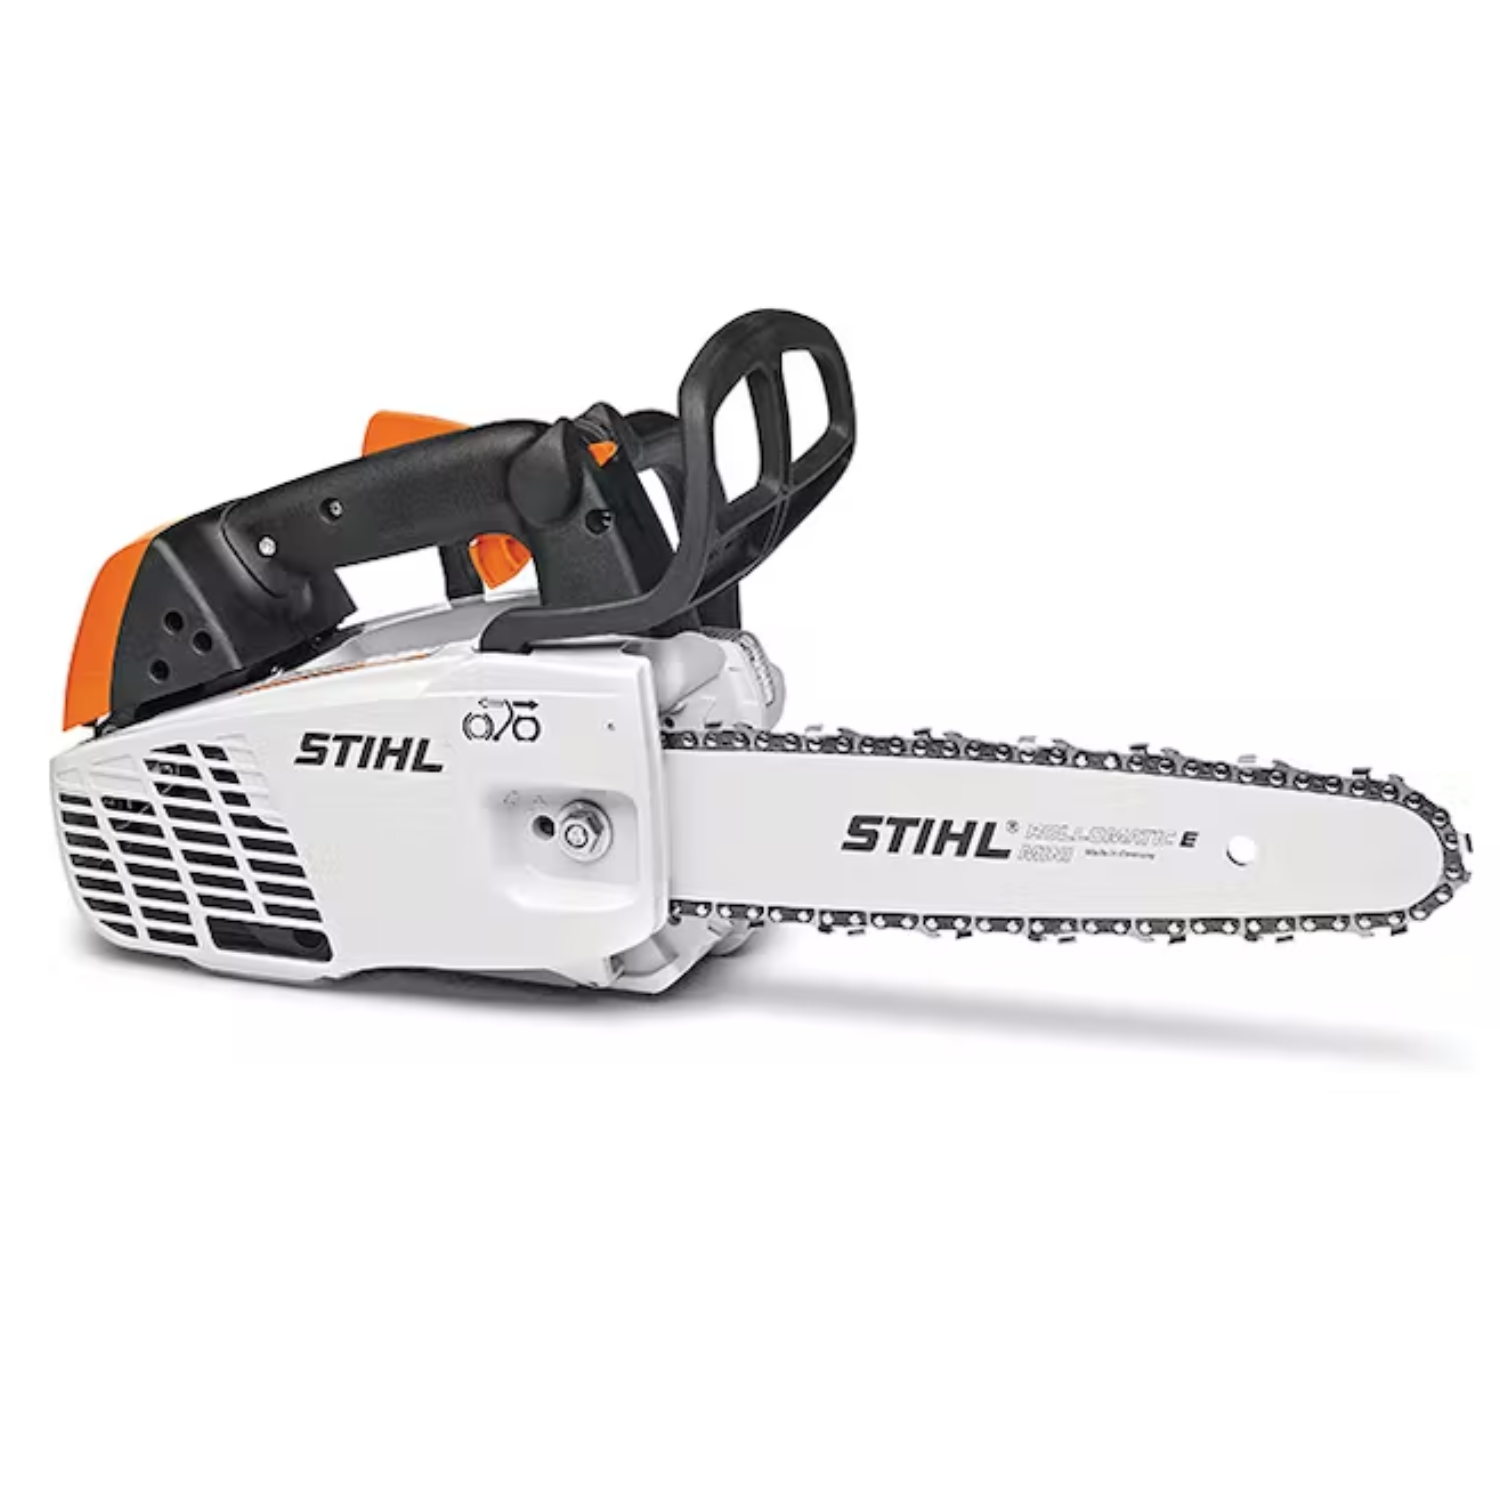 Stihl MS 180 Gas Powered Chainsaw